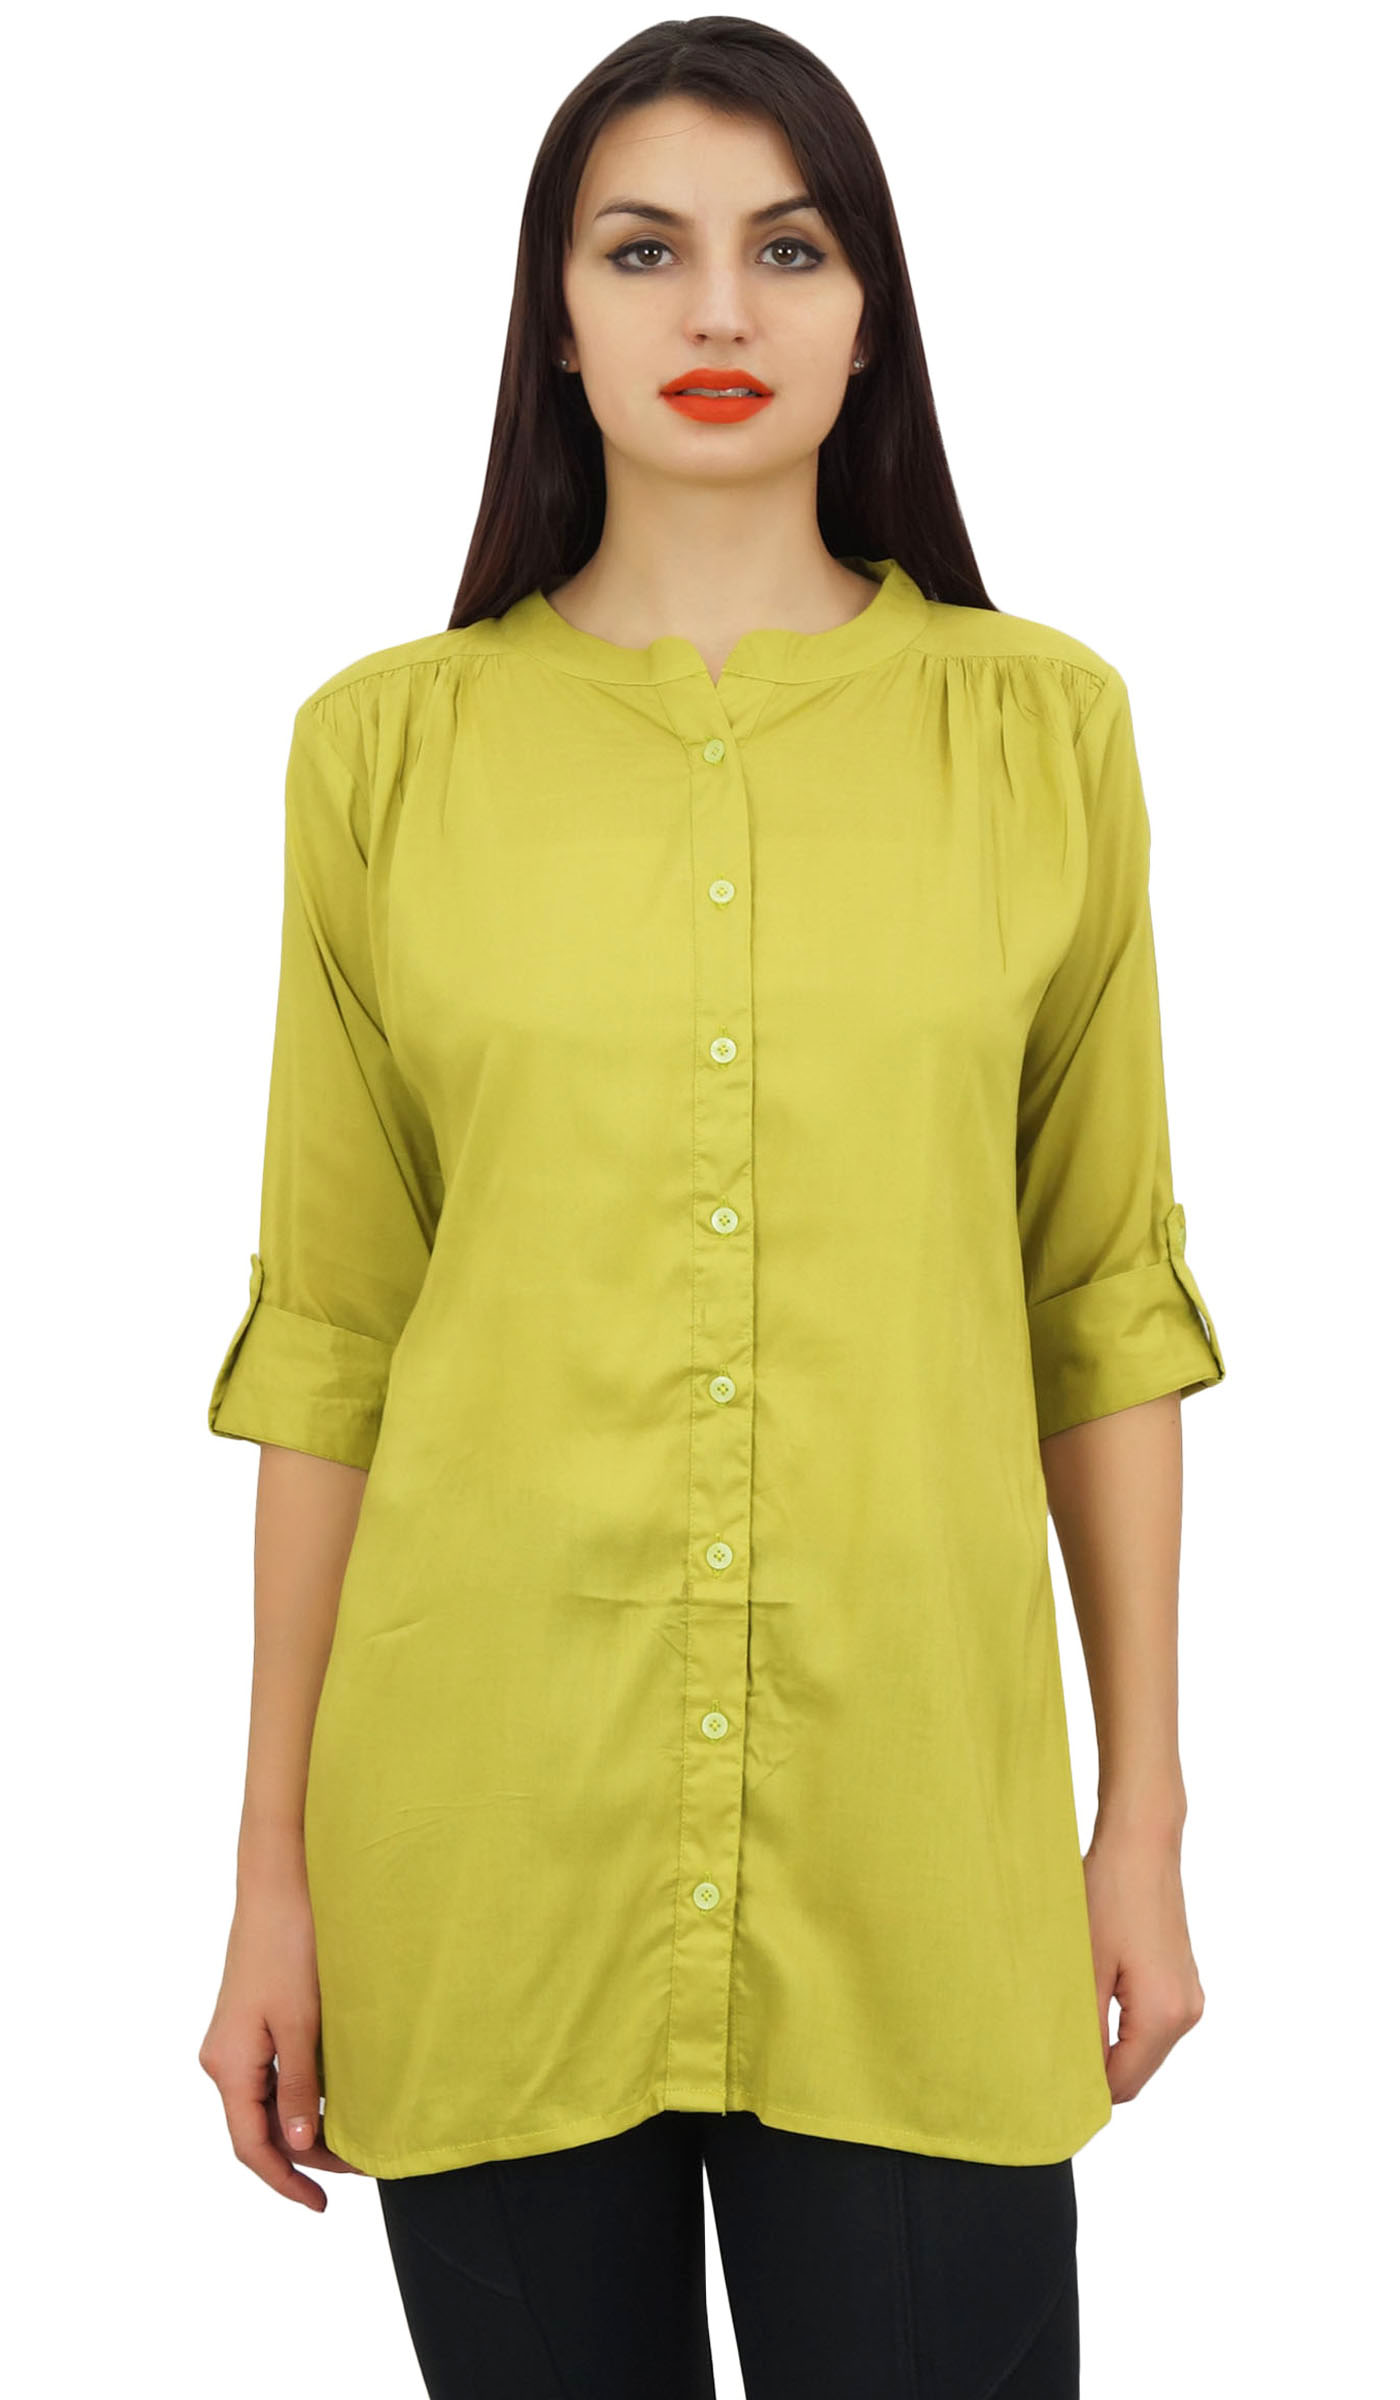 Phagun Women's Summer Yellow Cotton Modal Tunic Shirt Top With Front ...